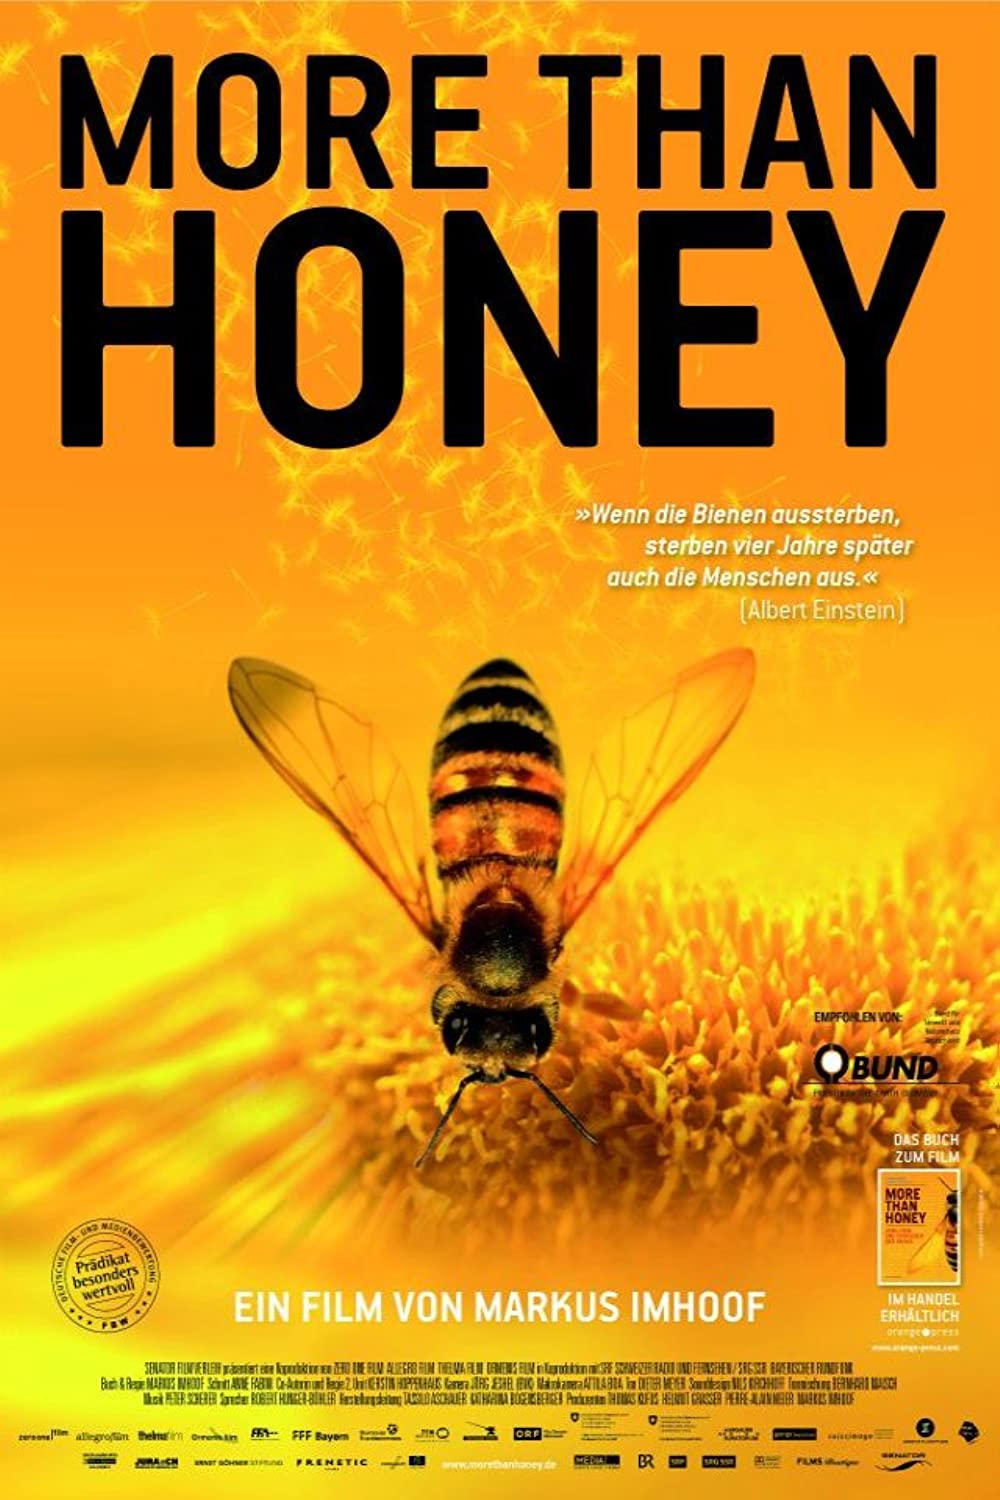 Filmbeschreibung zu More than Honey (OV)